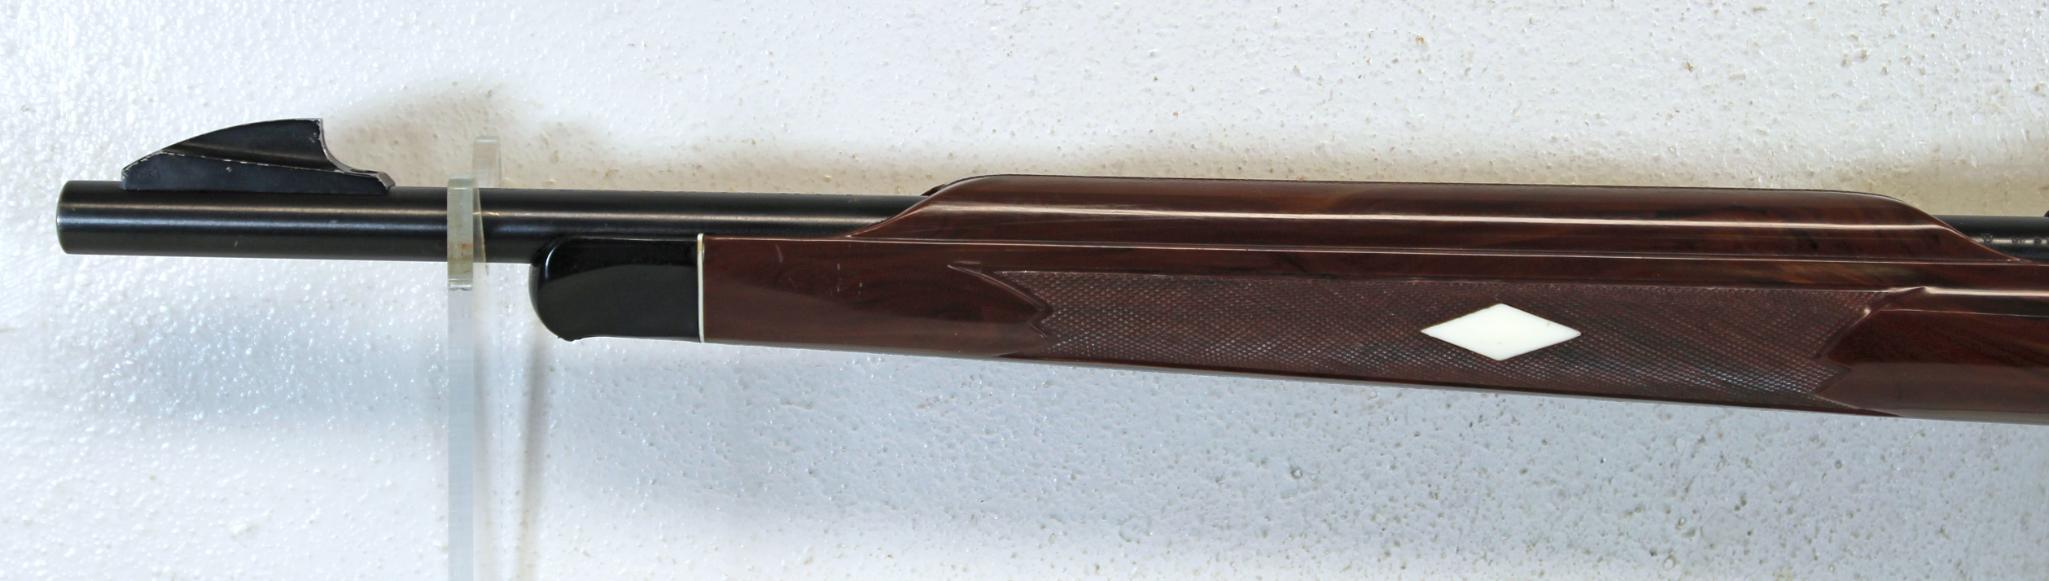 Remington Nylon 66 .22 LR Semi-Auto Rifle 1st Edition Made in 1959... Mohawk Brown Stock and Forearm